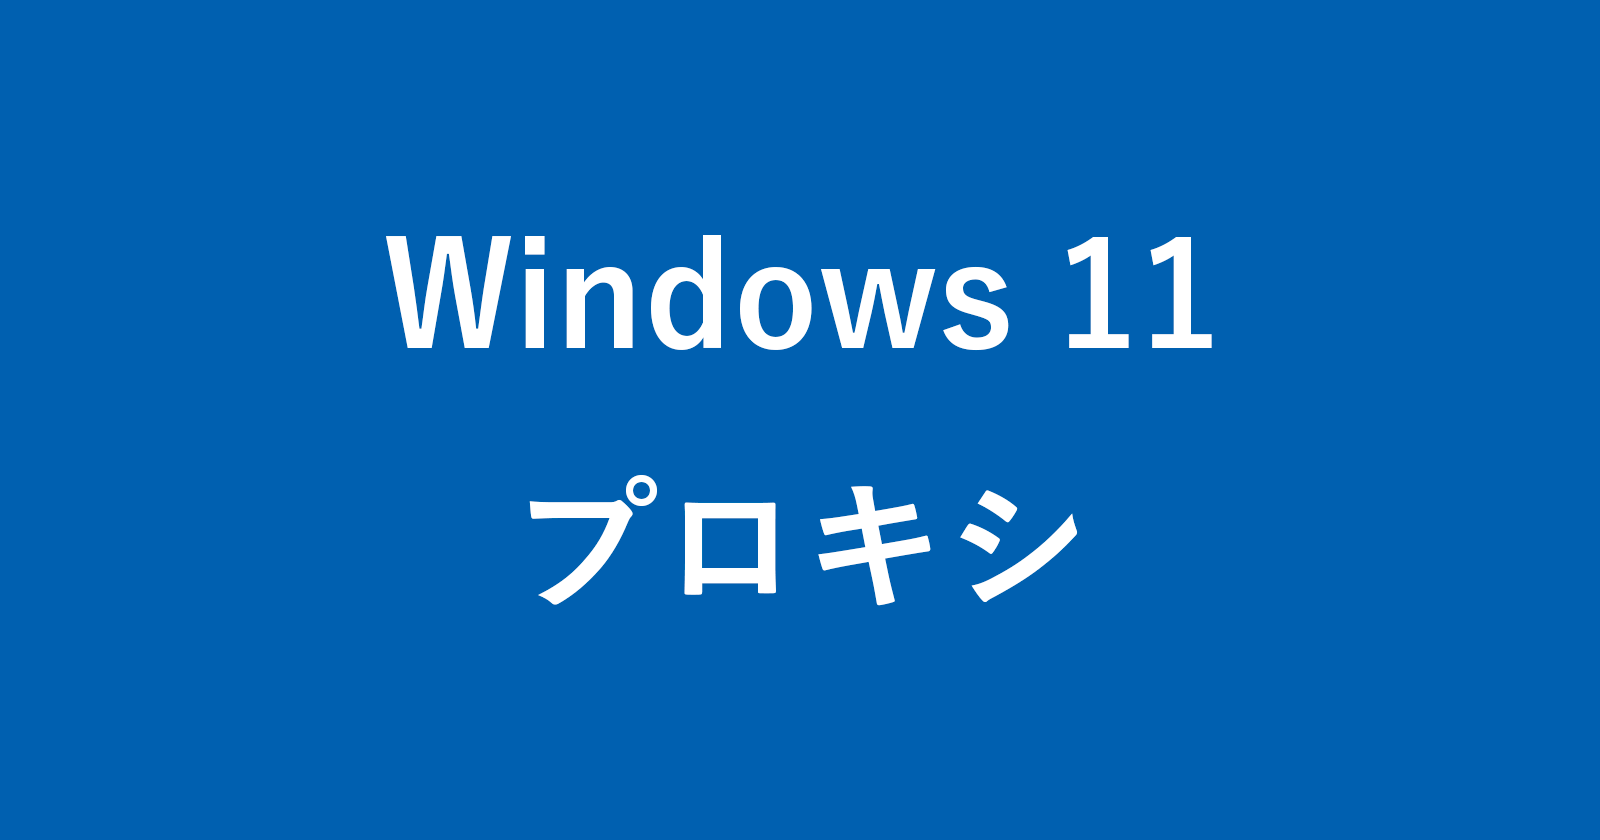 windows 11 proxy server